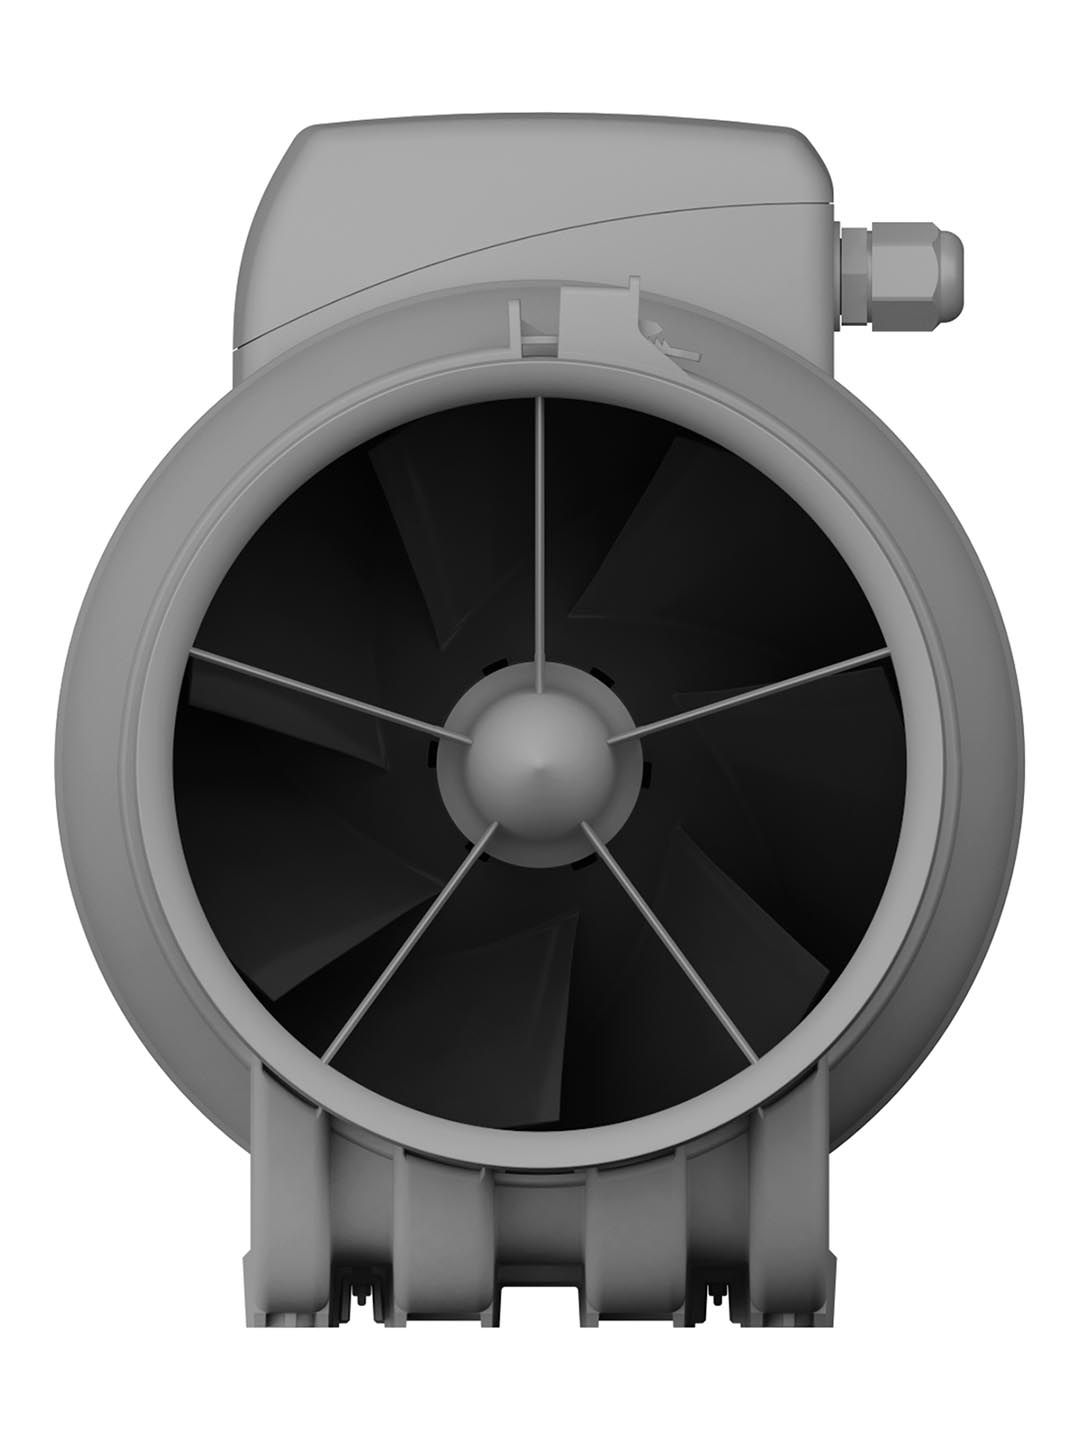 картинка Коммерческий вентилятор TYPHOON 160 2SP ERA PRO от магазина sp-market